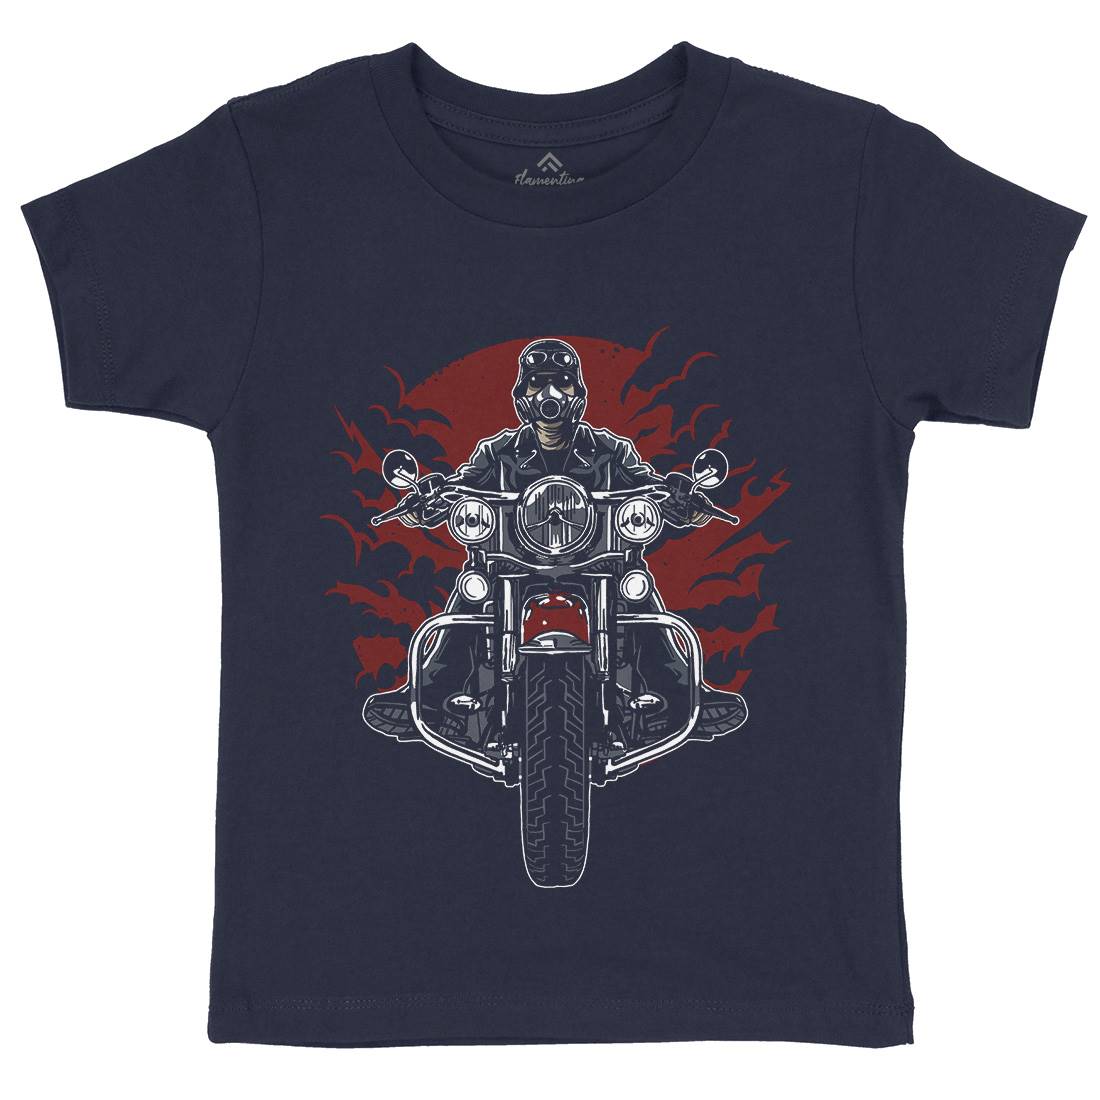 Wild Biker Kids Crew Neck T-Shirt Motorcycles A589